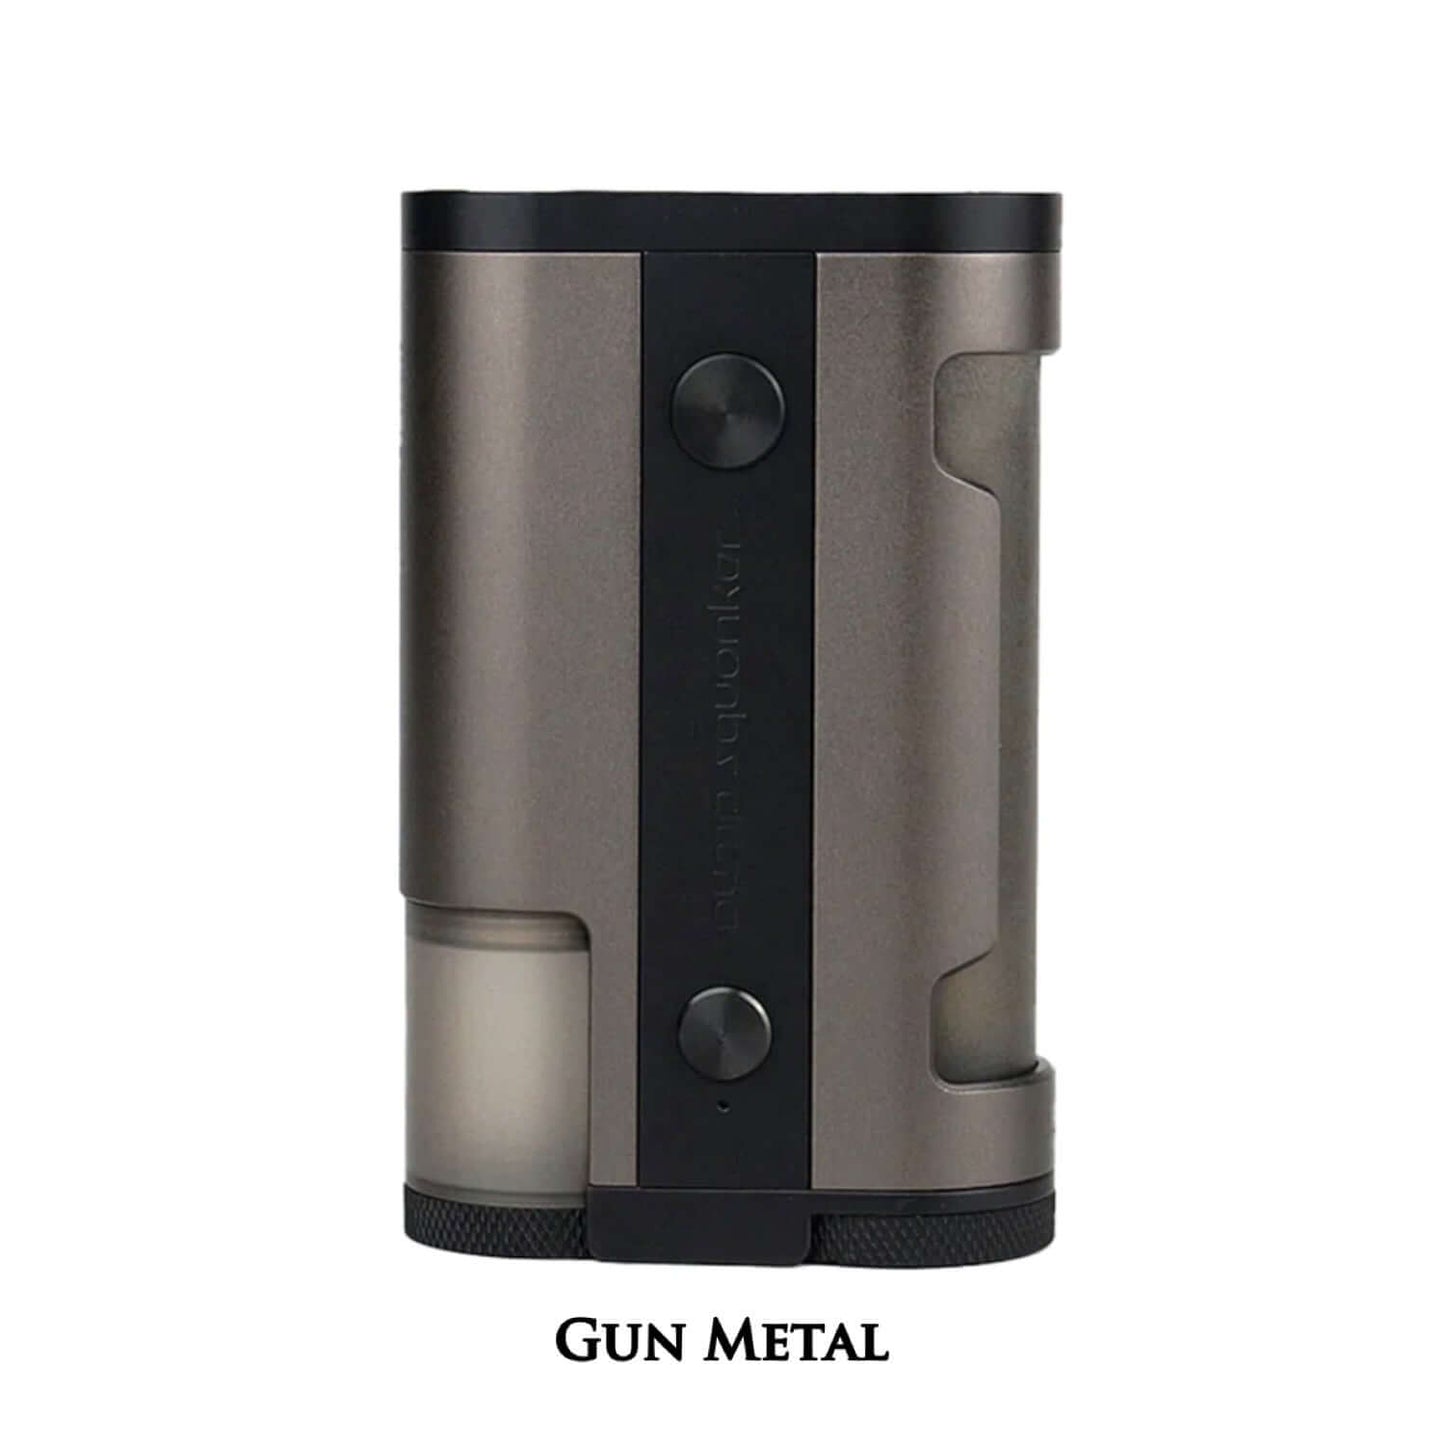 Pump Squonker in Gun Metal. Squonk Vape Mod by Dovpo X Across at LegioX Vape UK